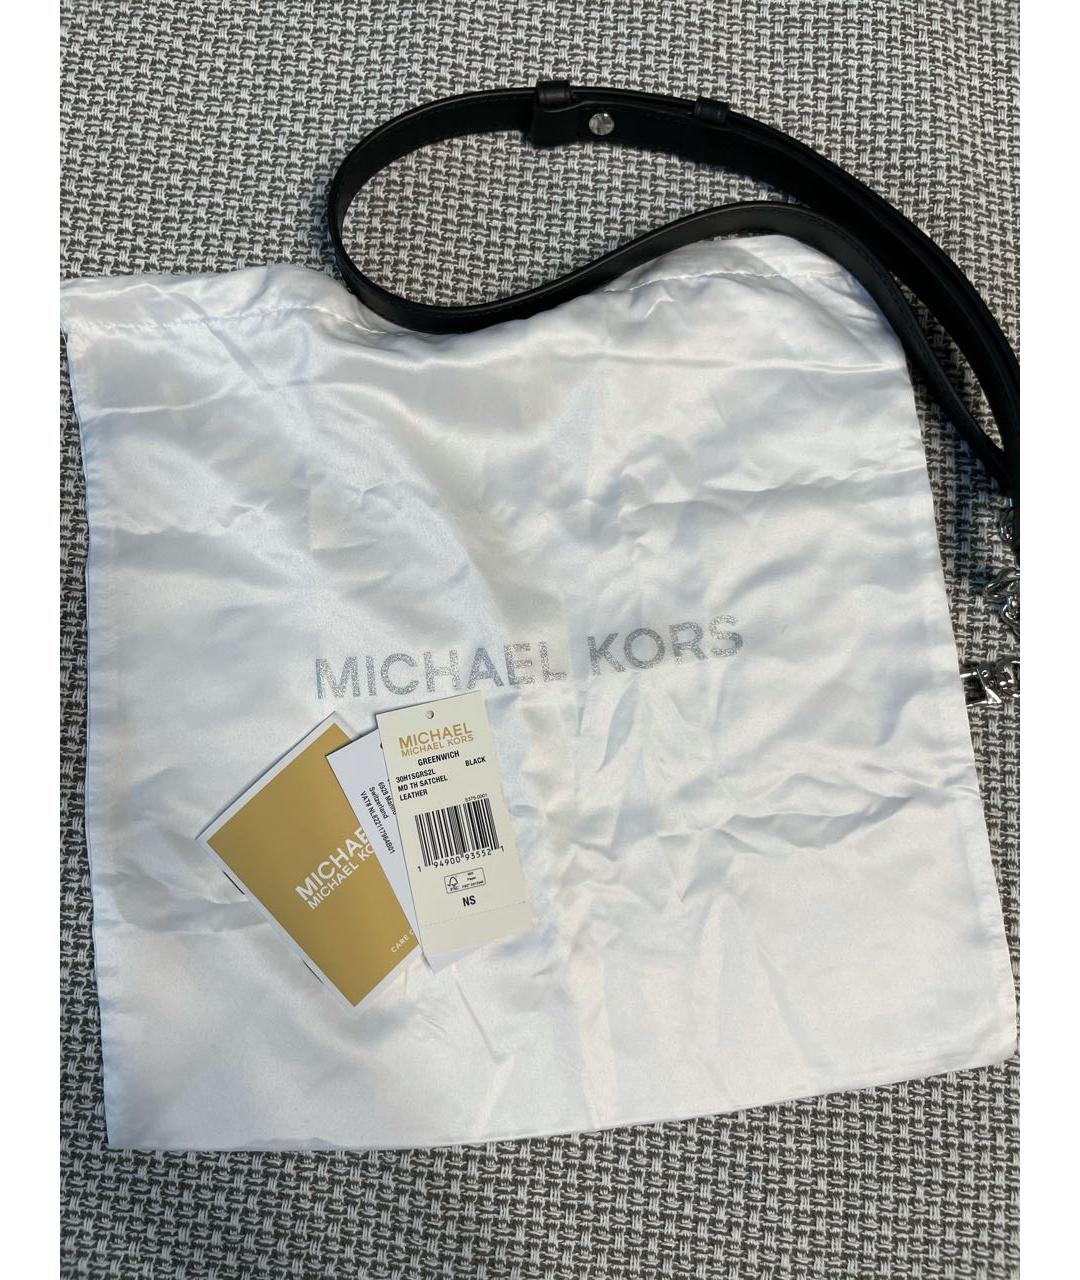 MICHAEL KORS Черная кожаная сумка с короткими ручками, фото 8